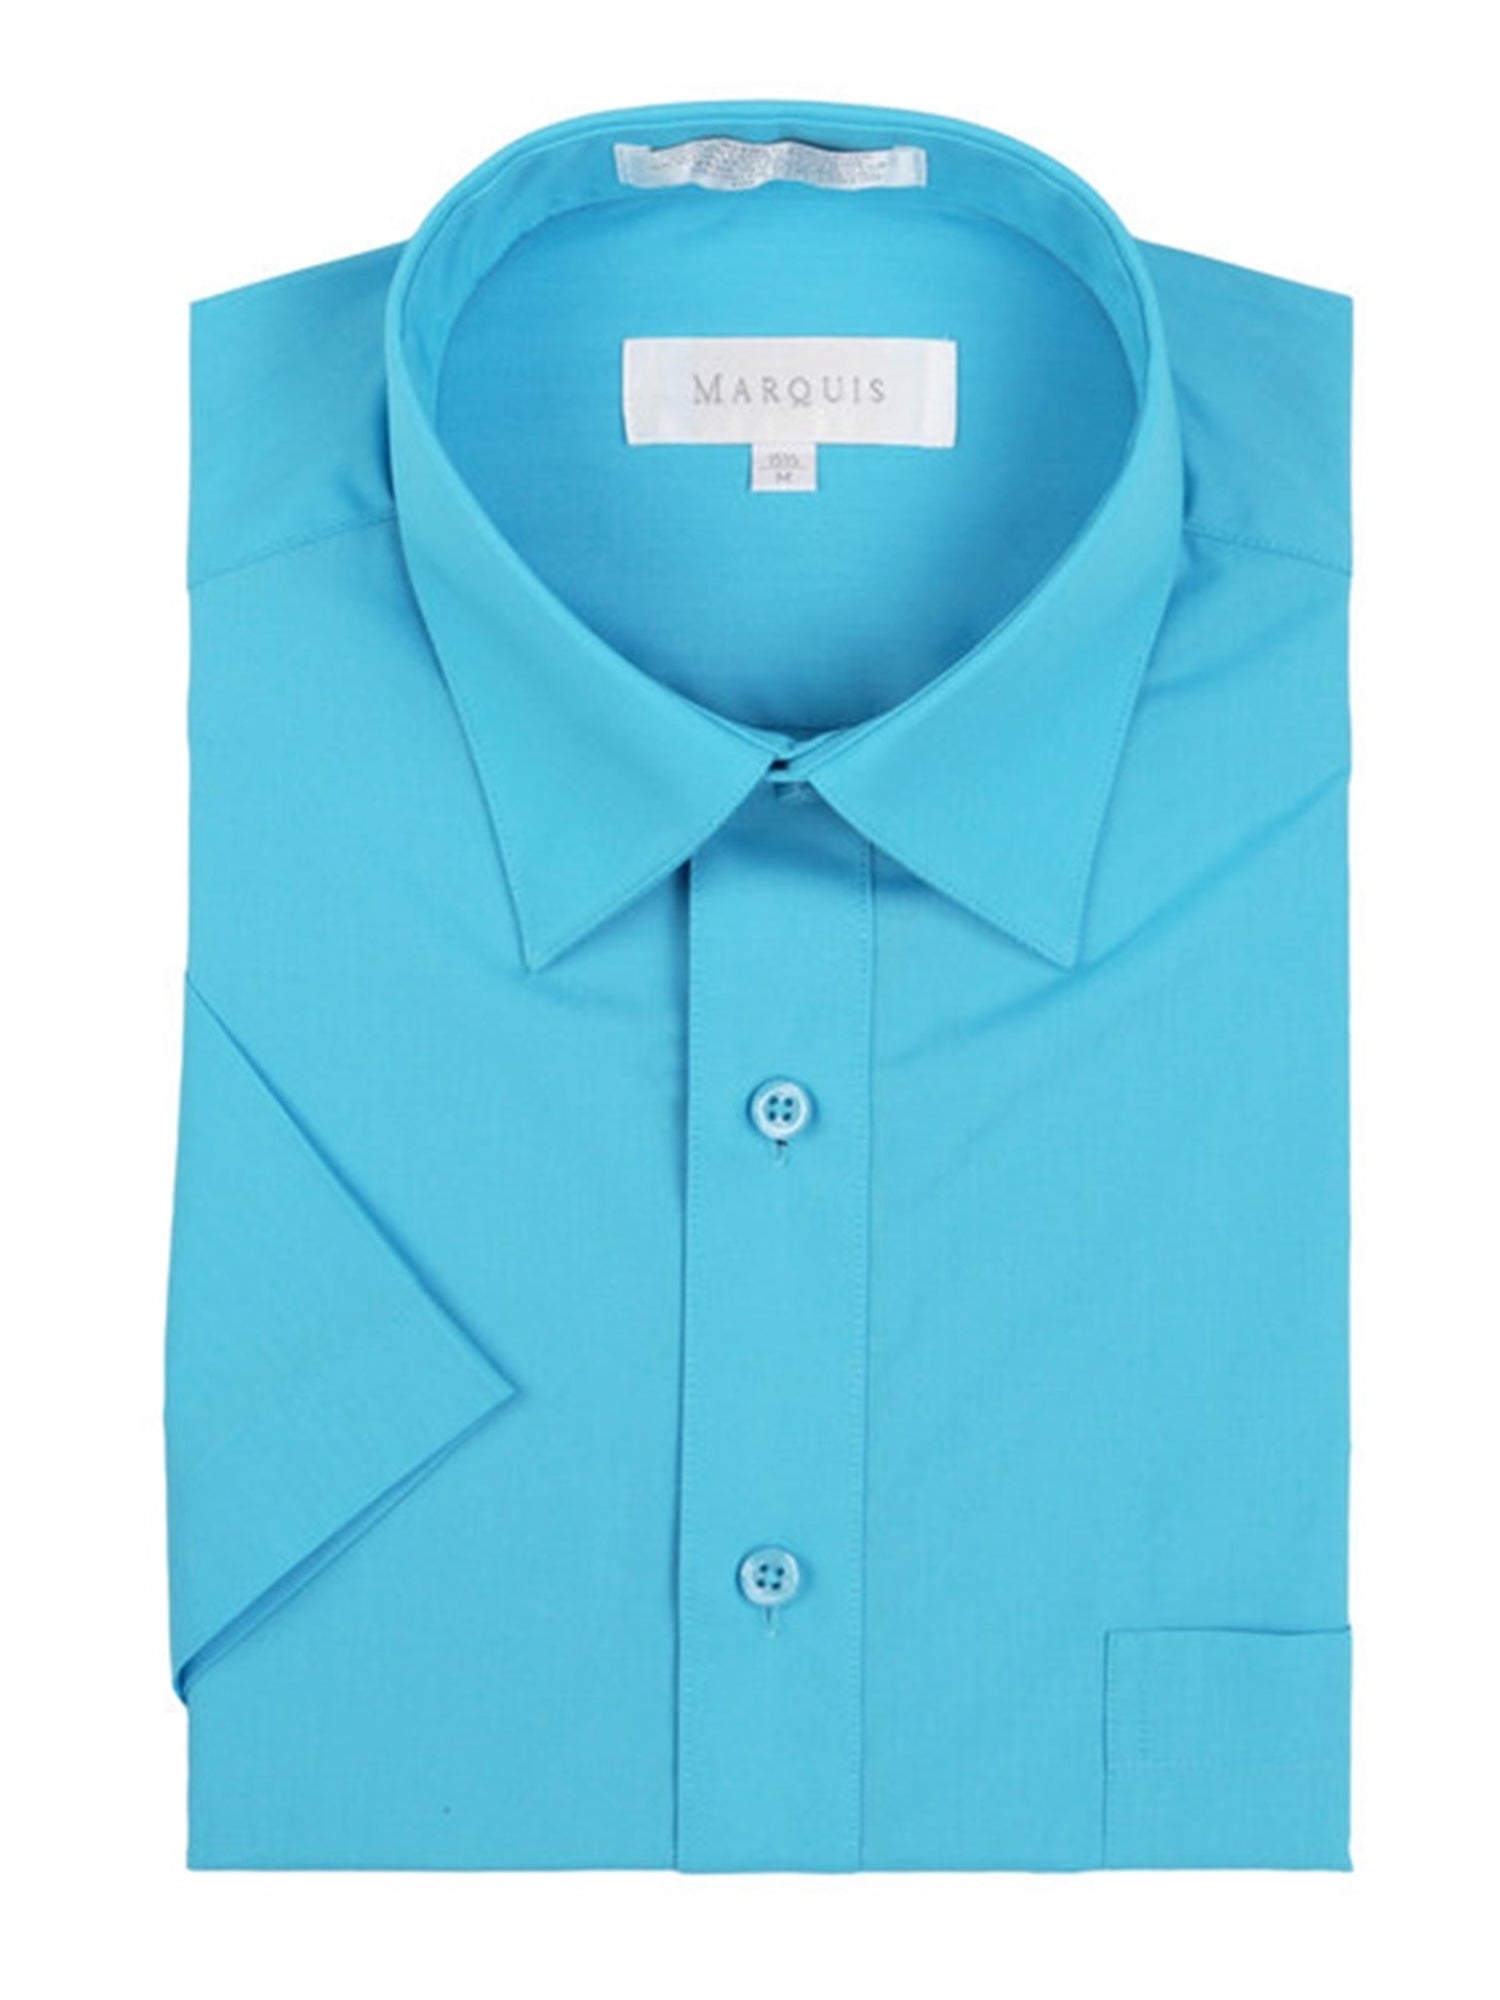 Marquis Men's Short Sleeve Regular Fit Dress Shirt - S To 4XL Men's Dress Shirts Marquis Turquoise Small/14.5 